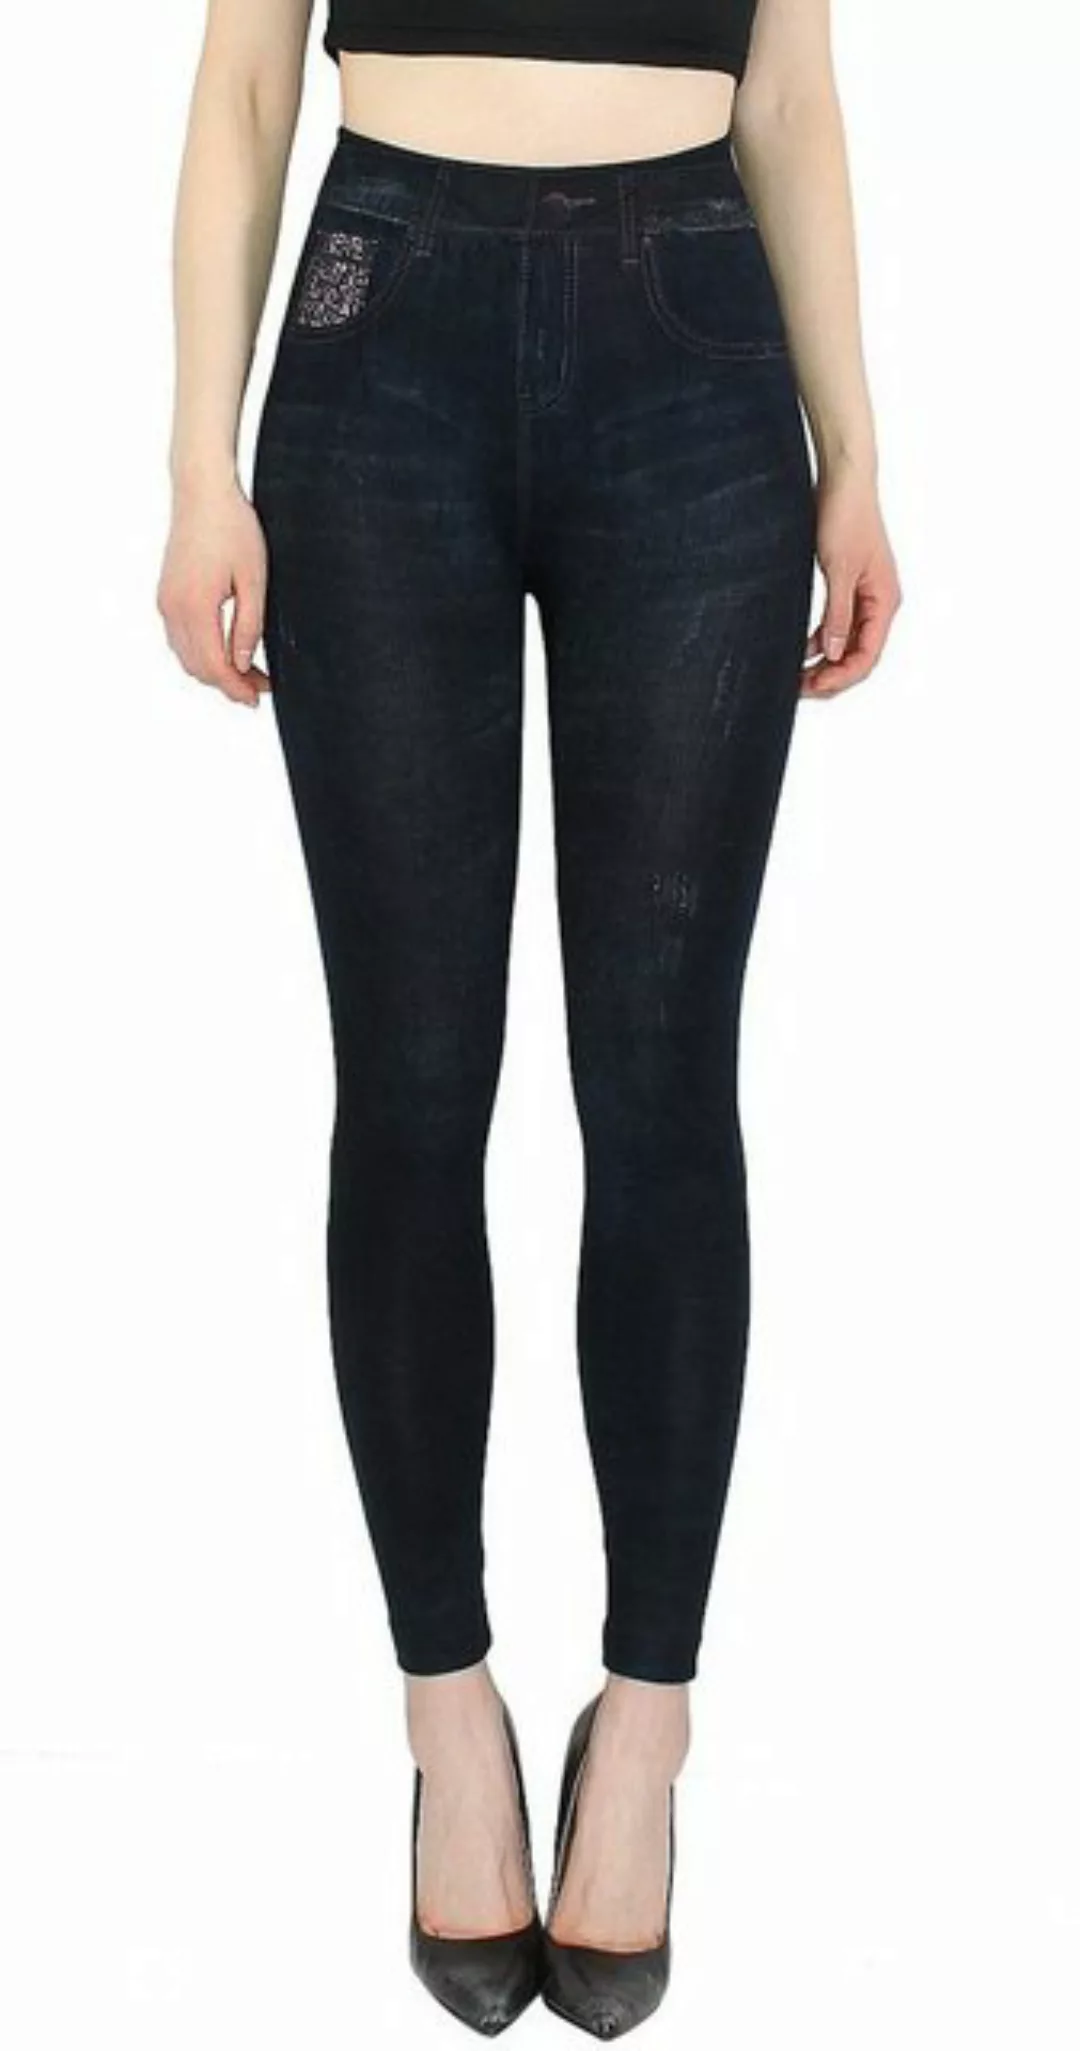 dy_mode Jeggings Damen Jeggings High Waist Leggings in Jeans Optik BequemJe günstig online kaufen